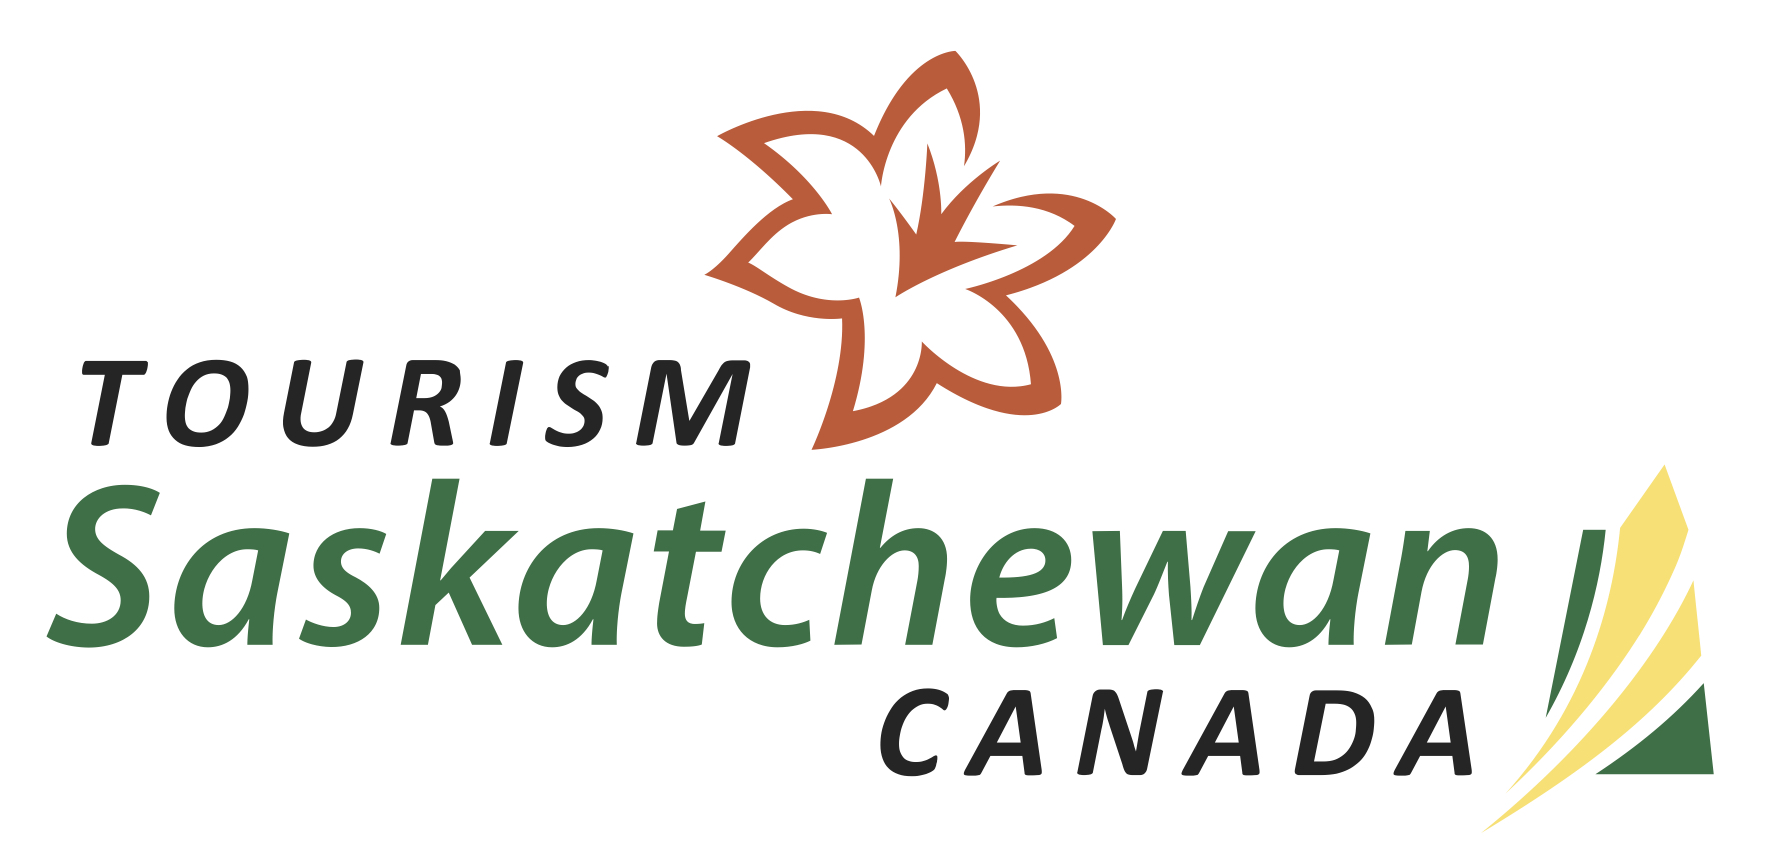 tourism-saskatchewan-canada-logo-vector copy